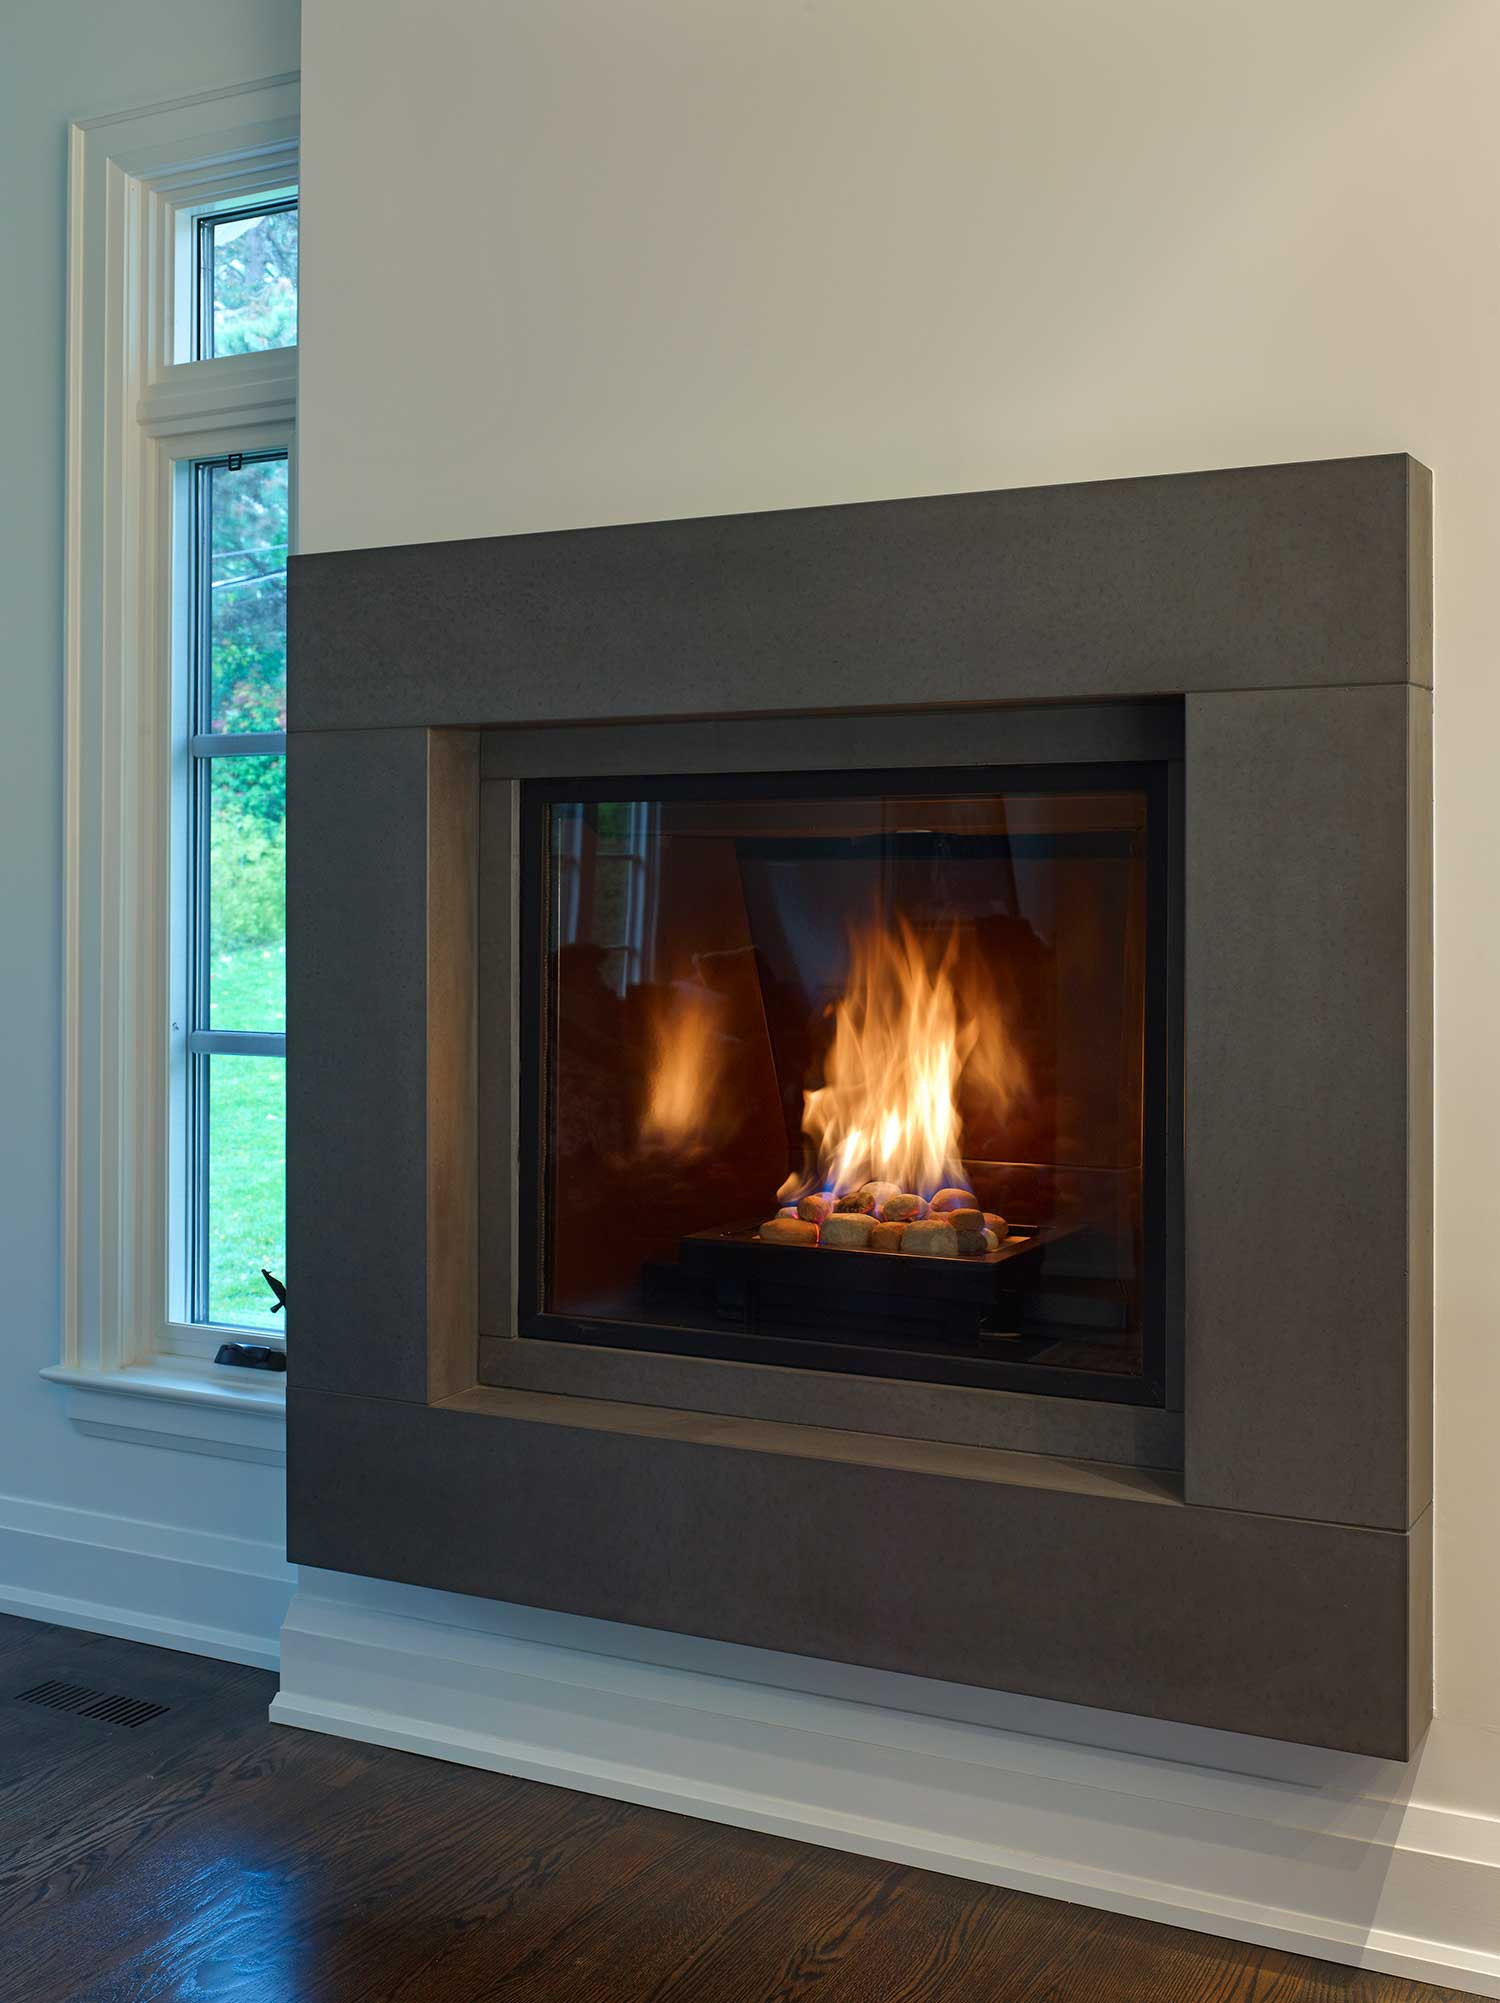 Best ideas about Modern Fireplace Mantels
. Save or Pin LINNEA 4 MODERN FIREPLACE MANTEL CHARCOAL Now.